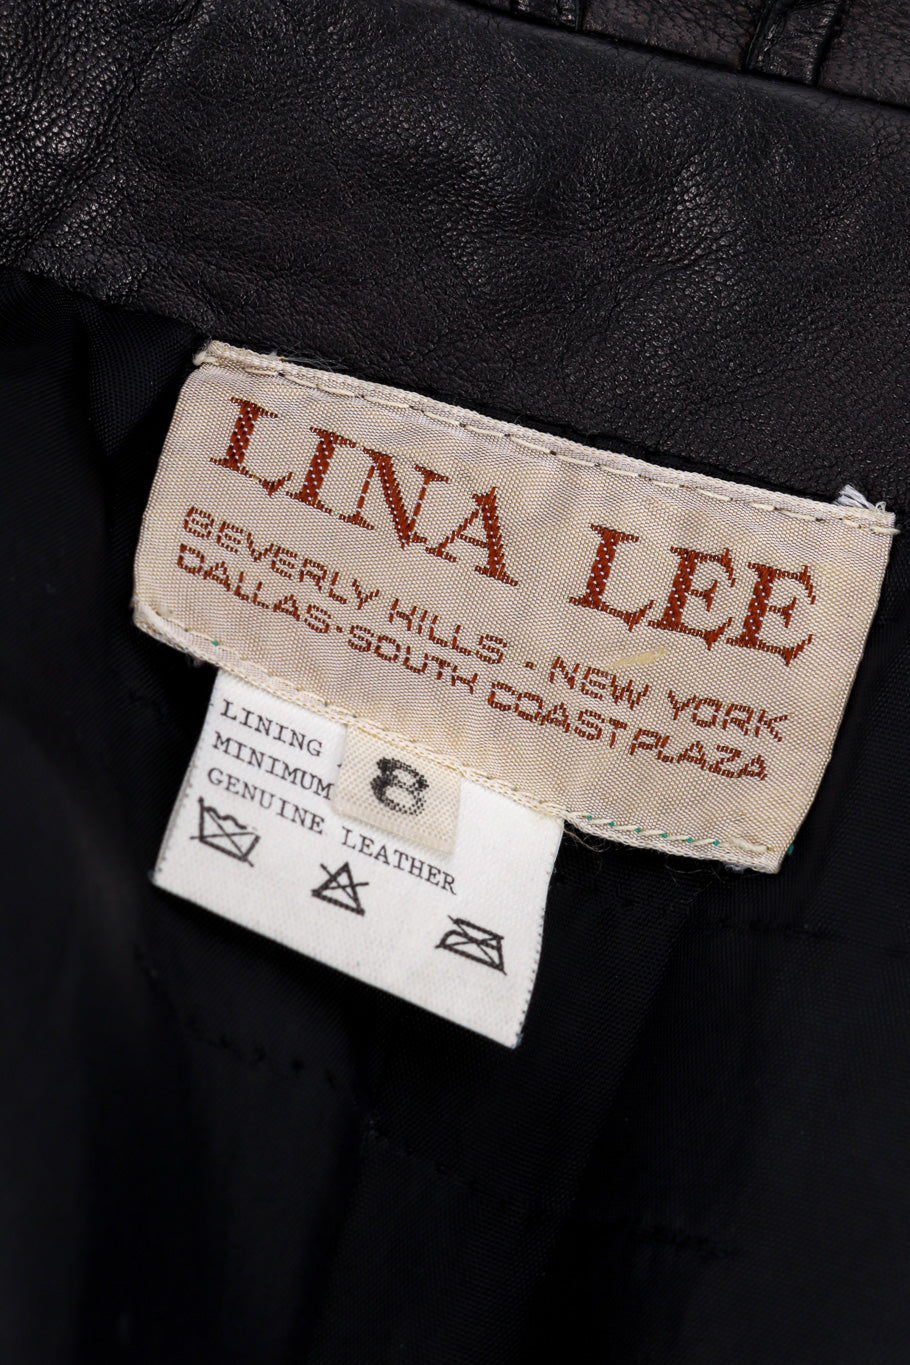 Vintage Lina Lee Studded Leather Jacket signature label closeup @recessla